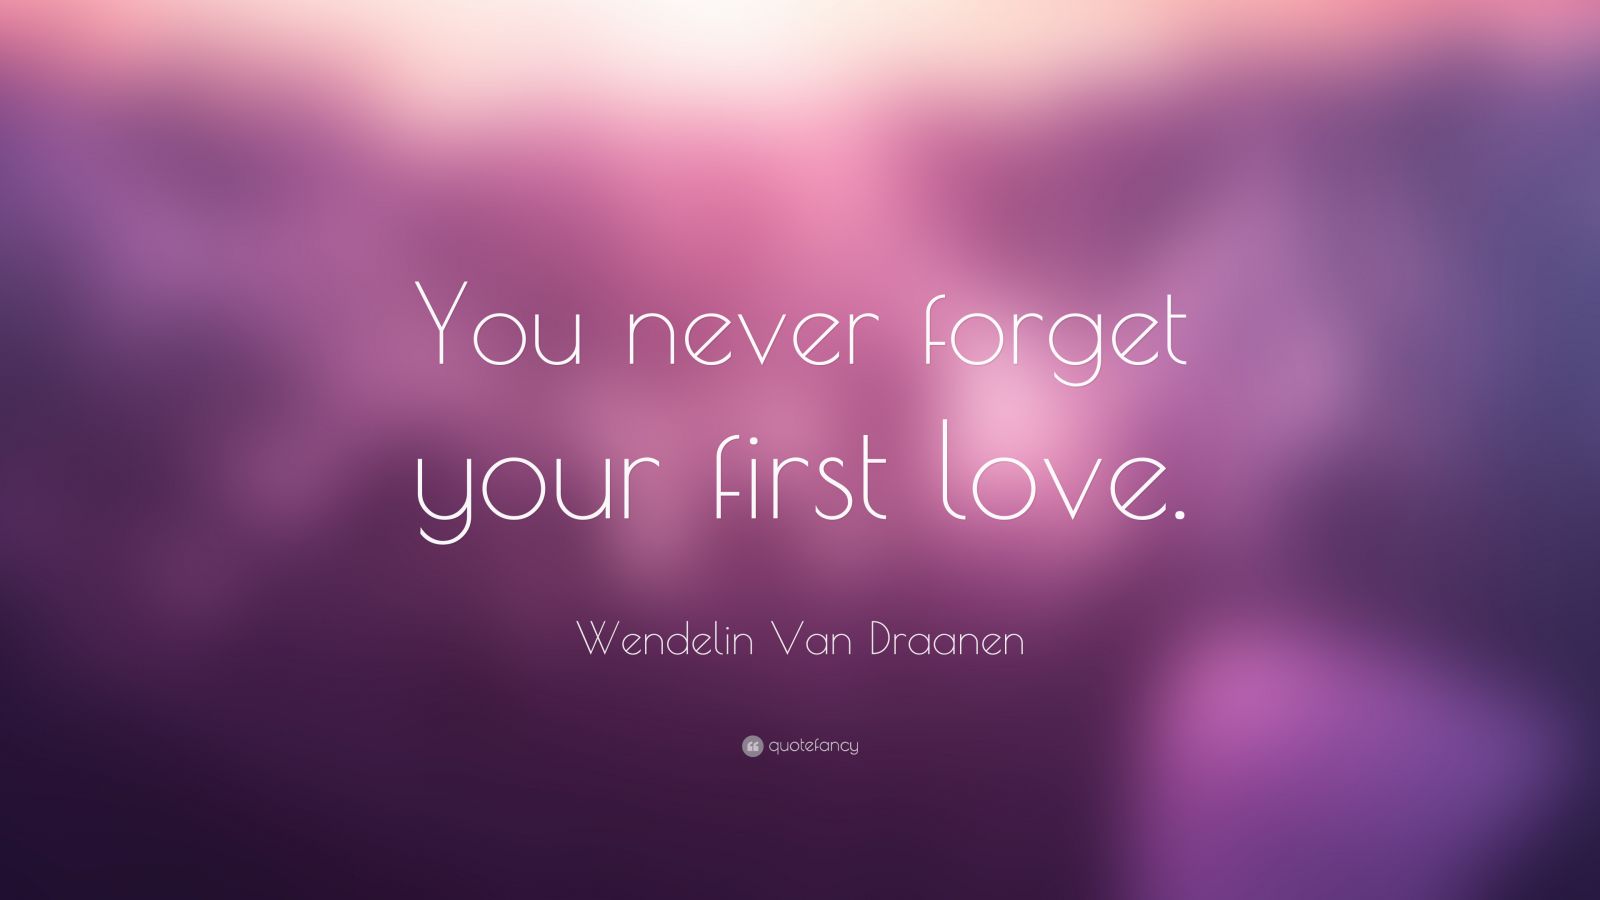 Wendelin Van Draanen Quote: “You never forget your first love.” (12 ...